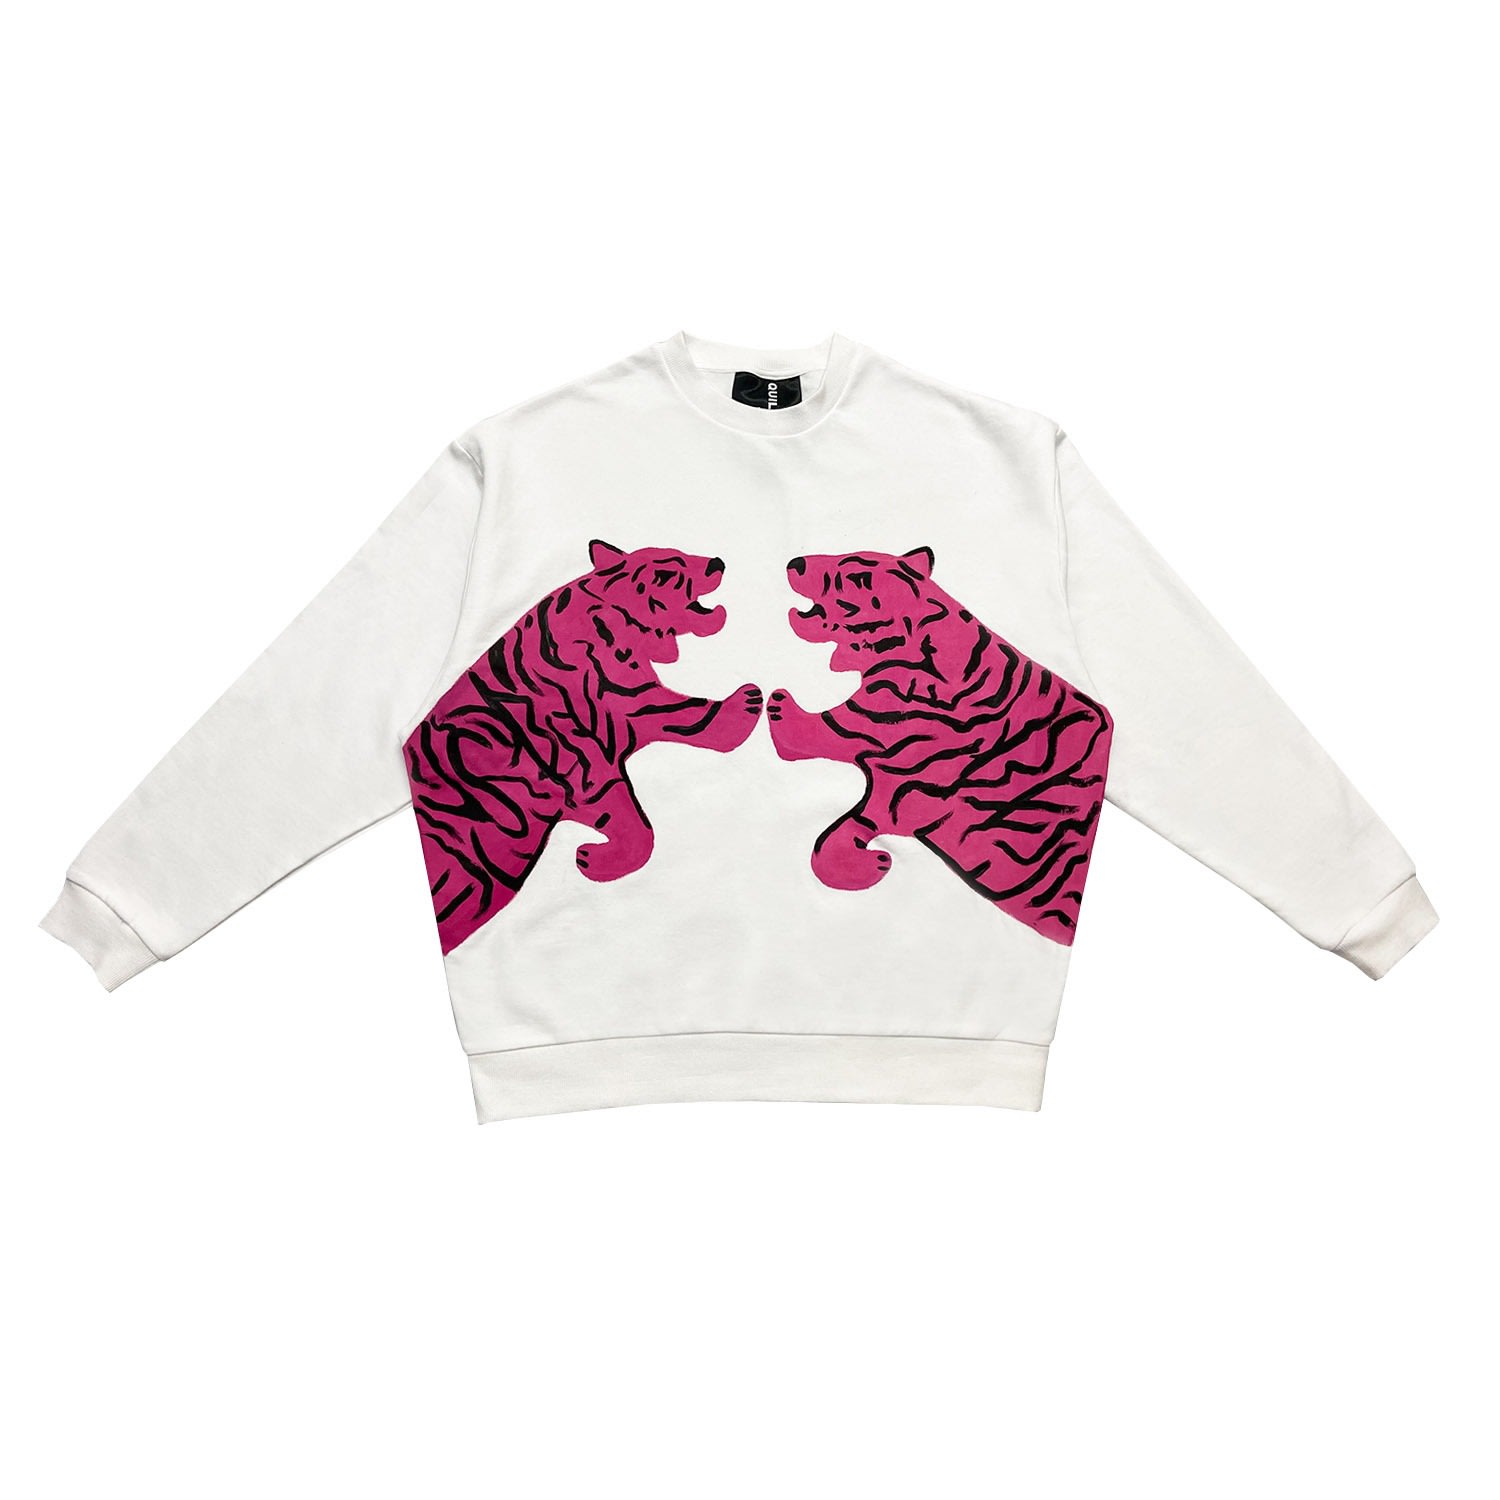 Men's White Sweatshirt With Pink Tiger Extra Small Quillattire